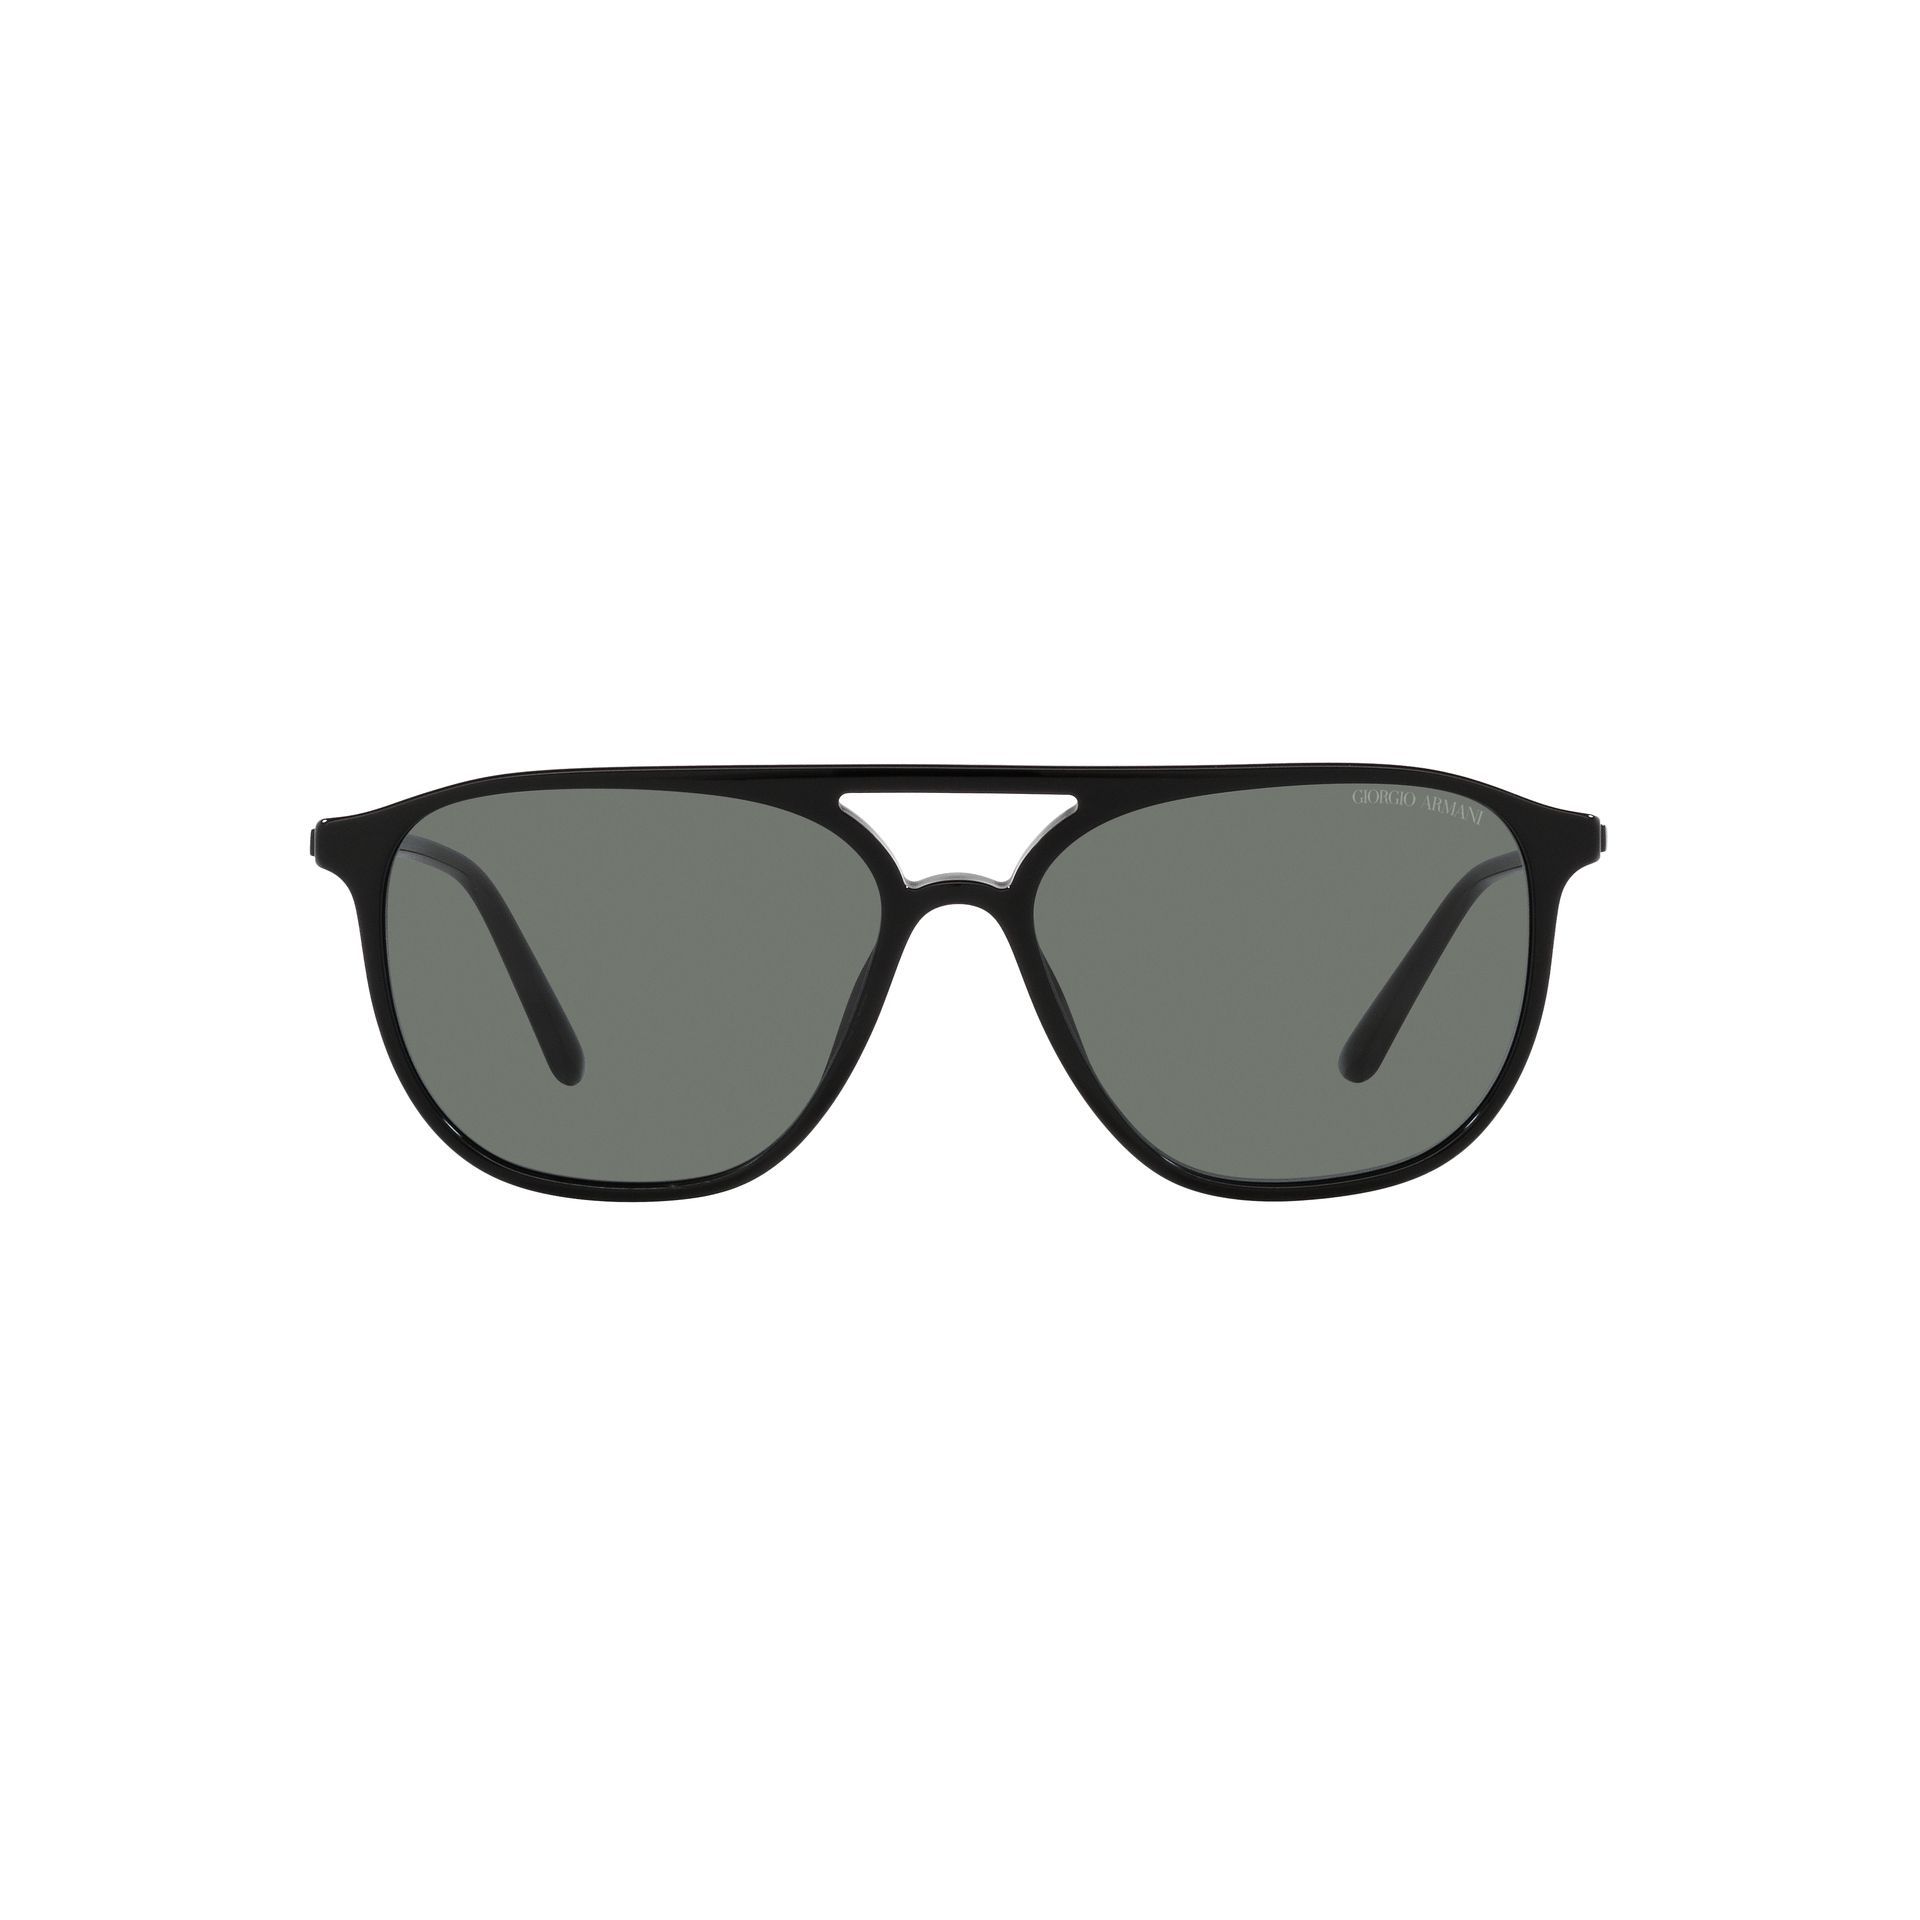 0AR8179 Pilot Sunglasses 5001 1 - size 56